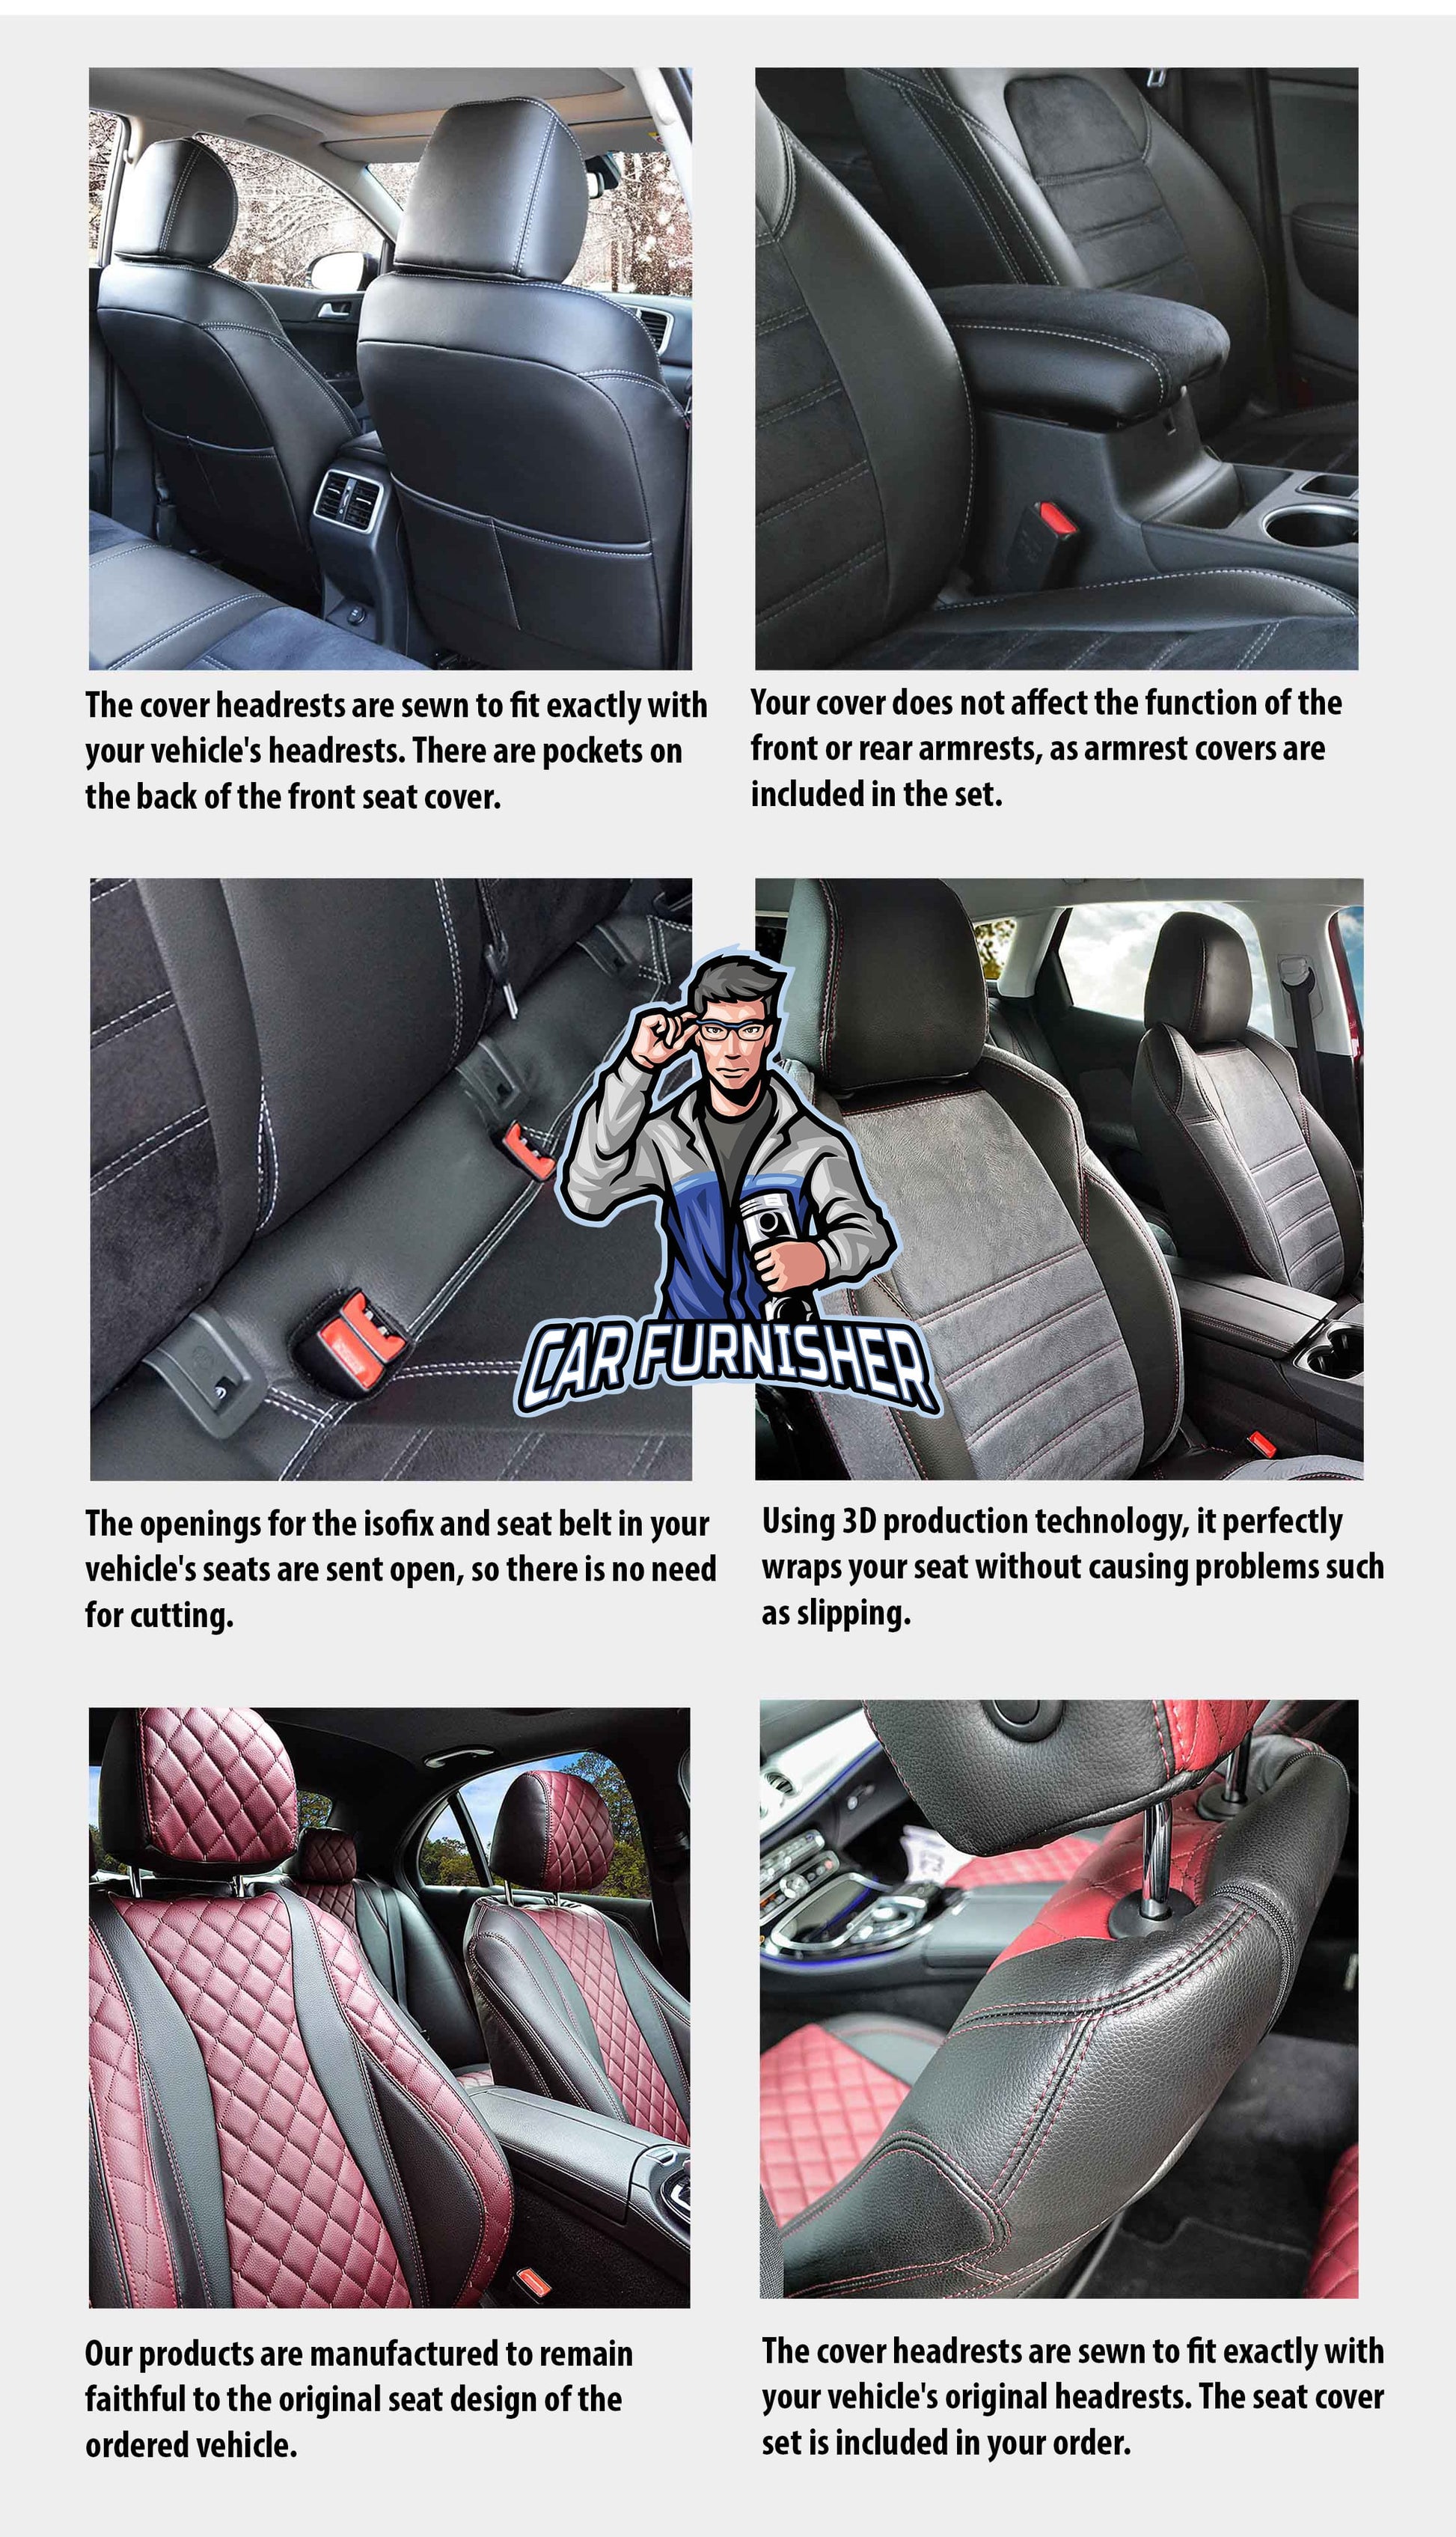 Toyota Auris Hybrid (2013-2019) interior & comfort